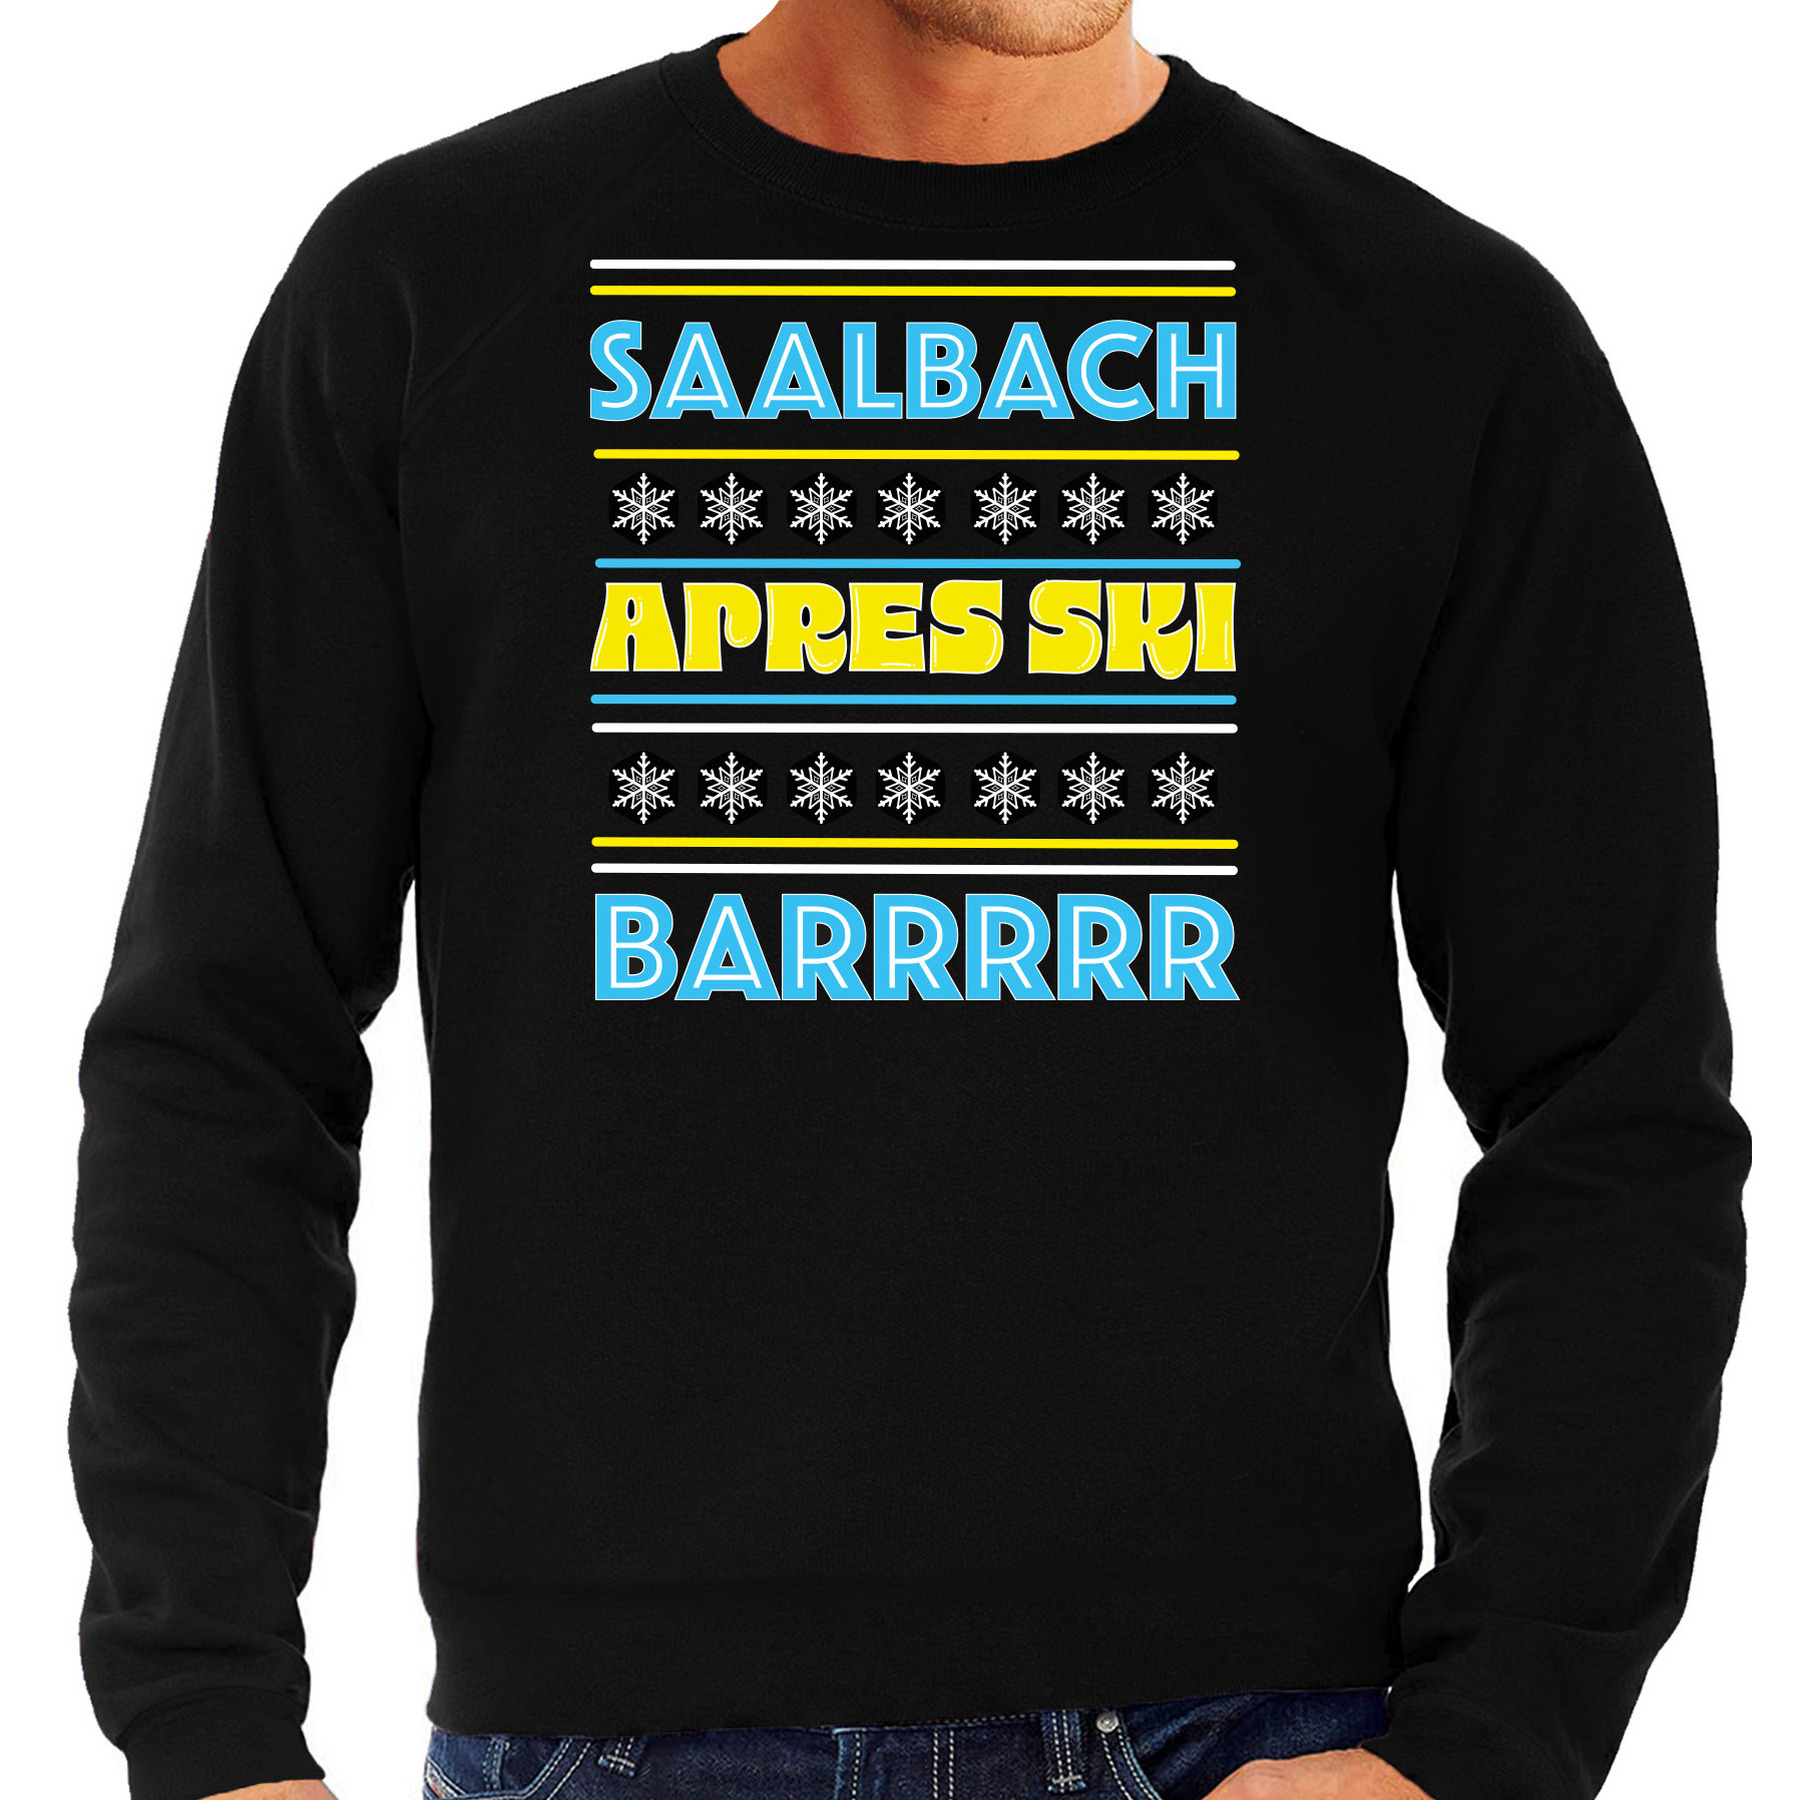 Apres ski sweater voor heren Saalbach zwart apresski kroeg skien-snowboarden wintersport